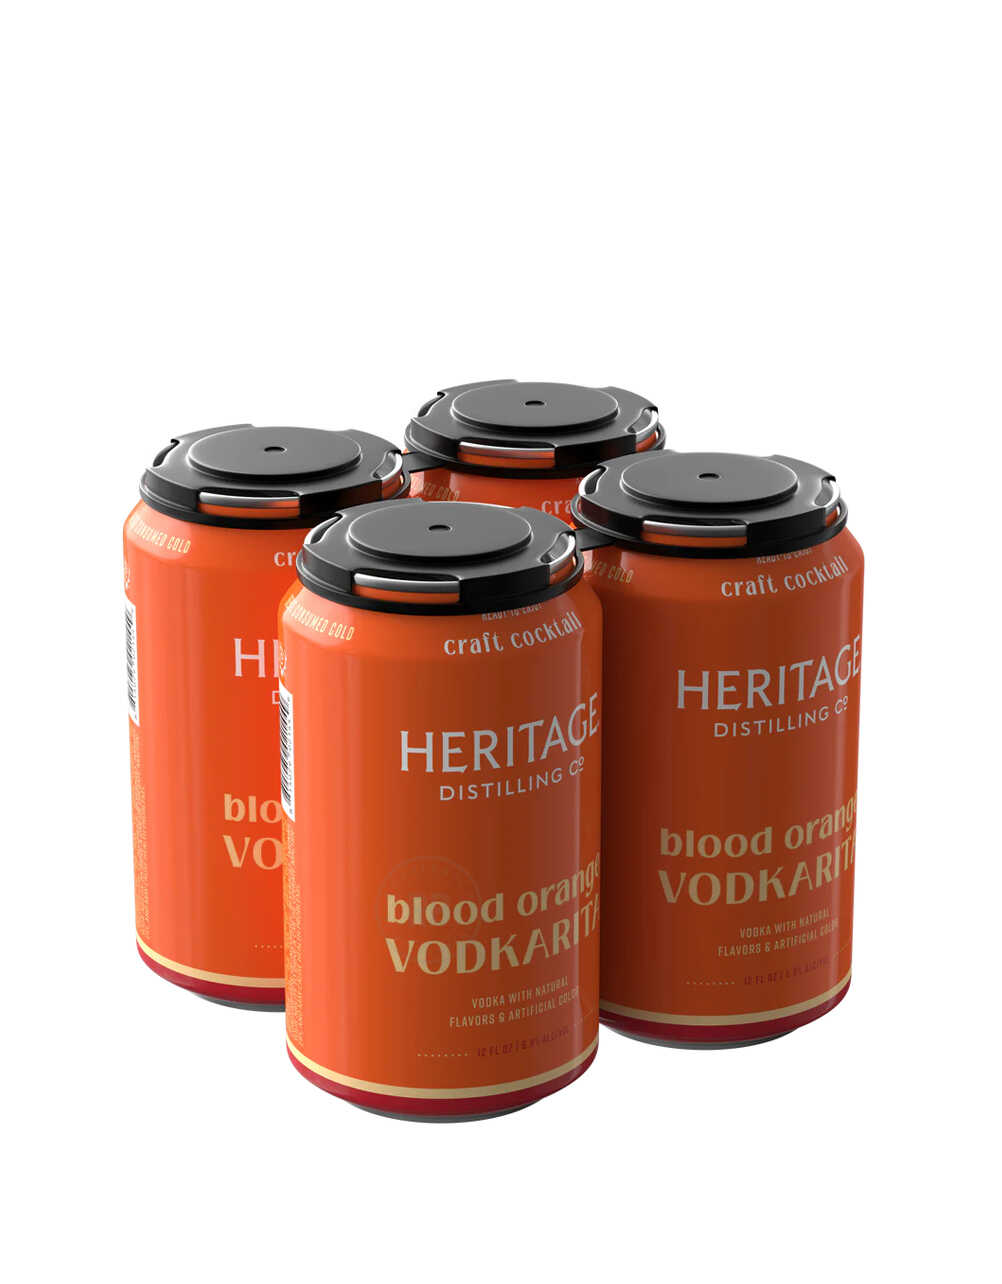 Heritage Distilling Co Blood Orange Vodkarita (4 Pack) x 12oz